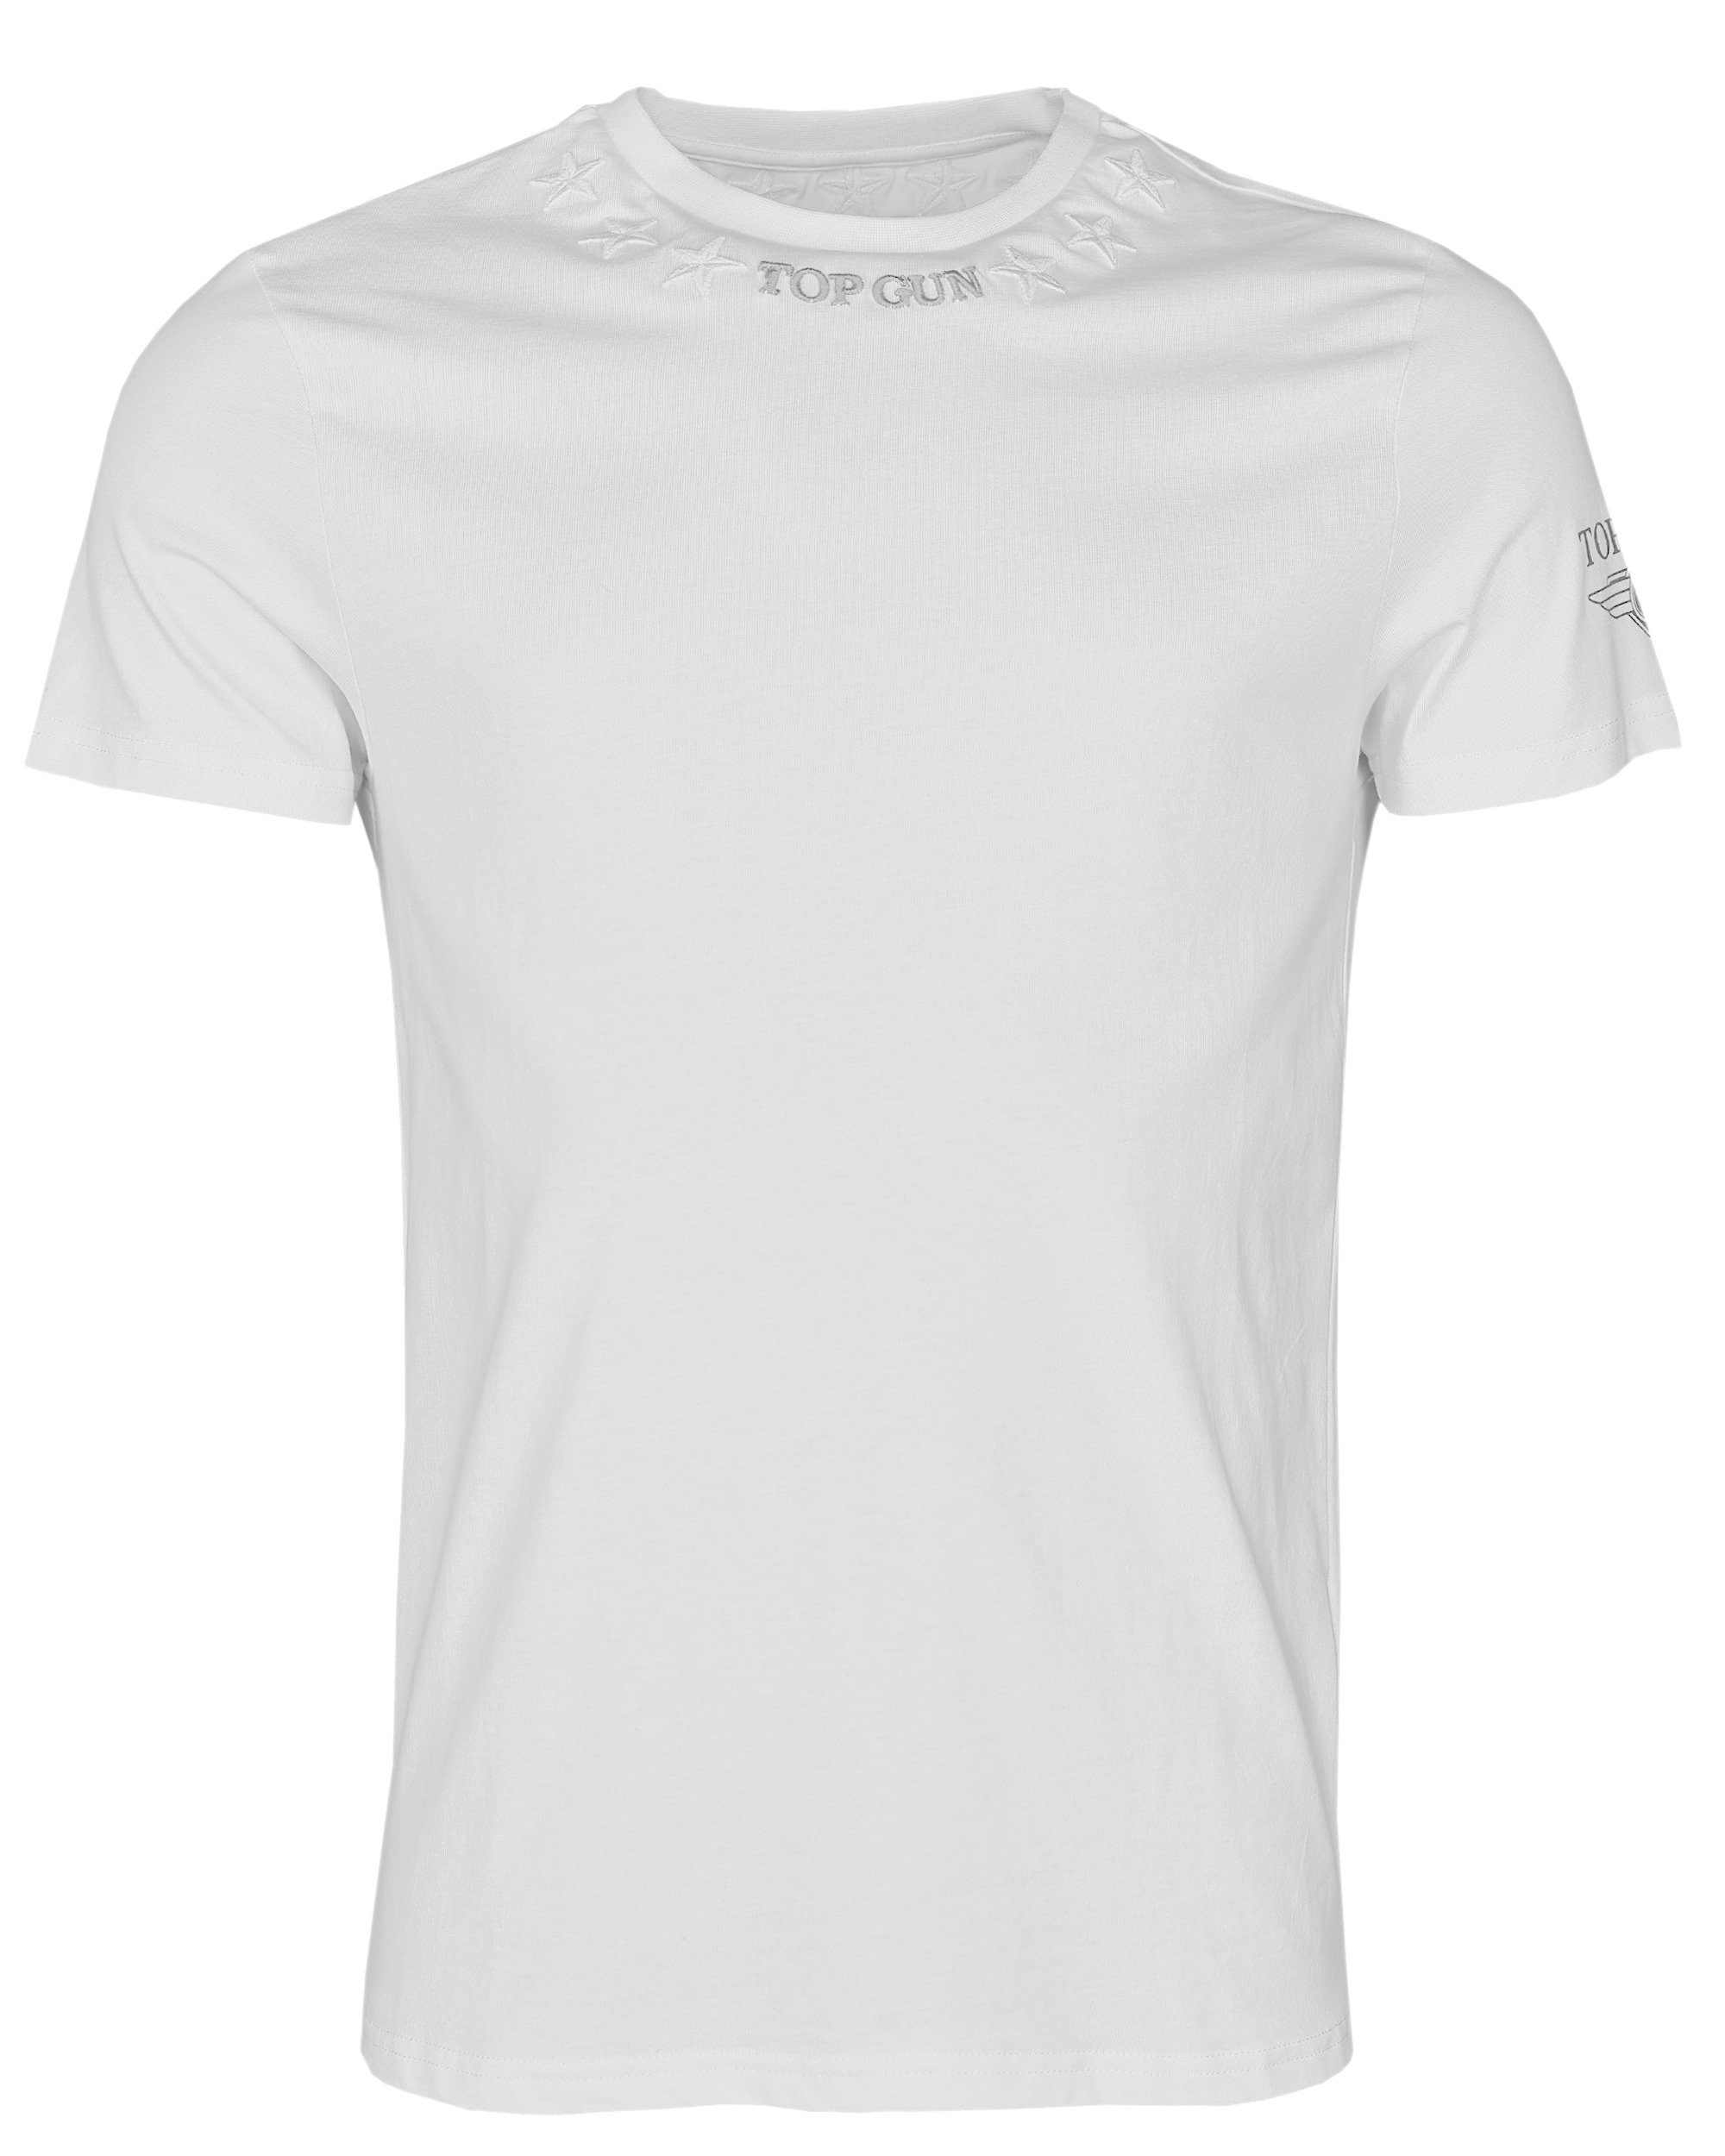 TOP GUN T-Shirt TG22001 white